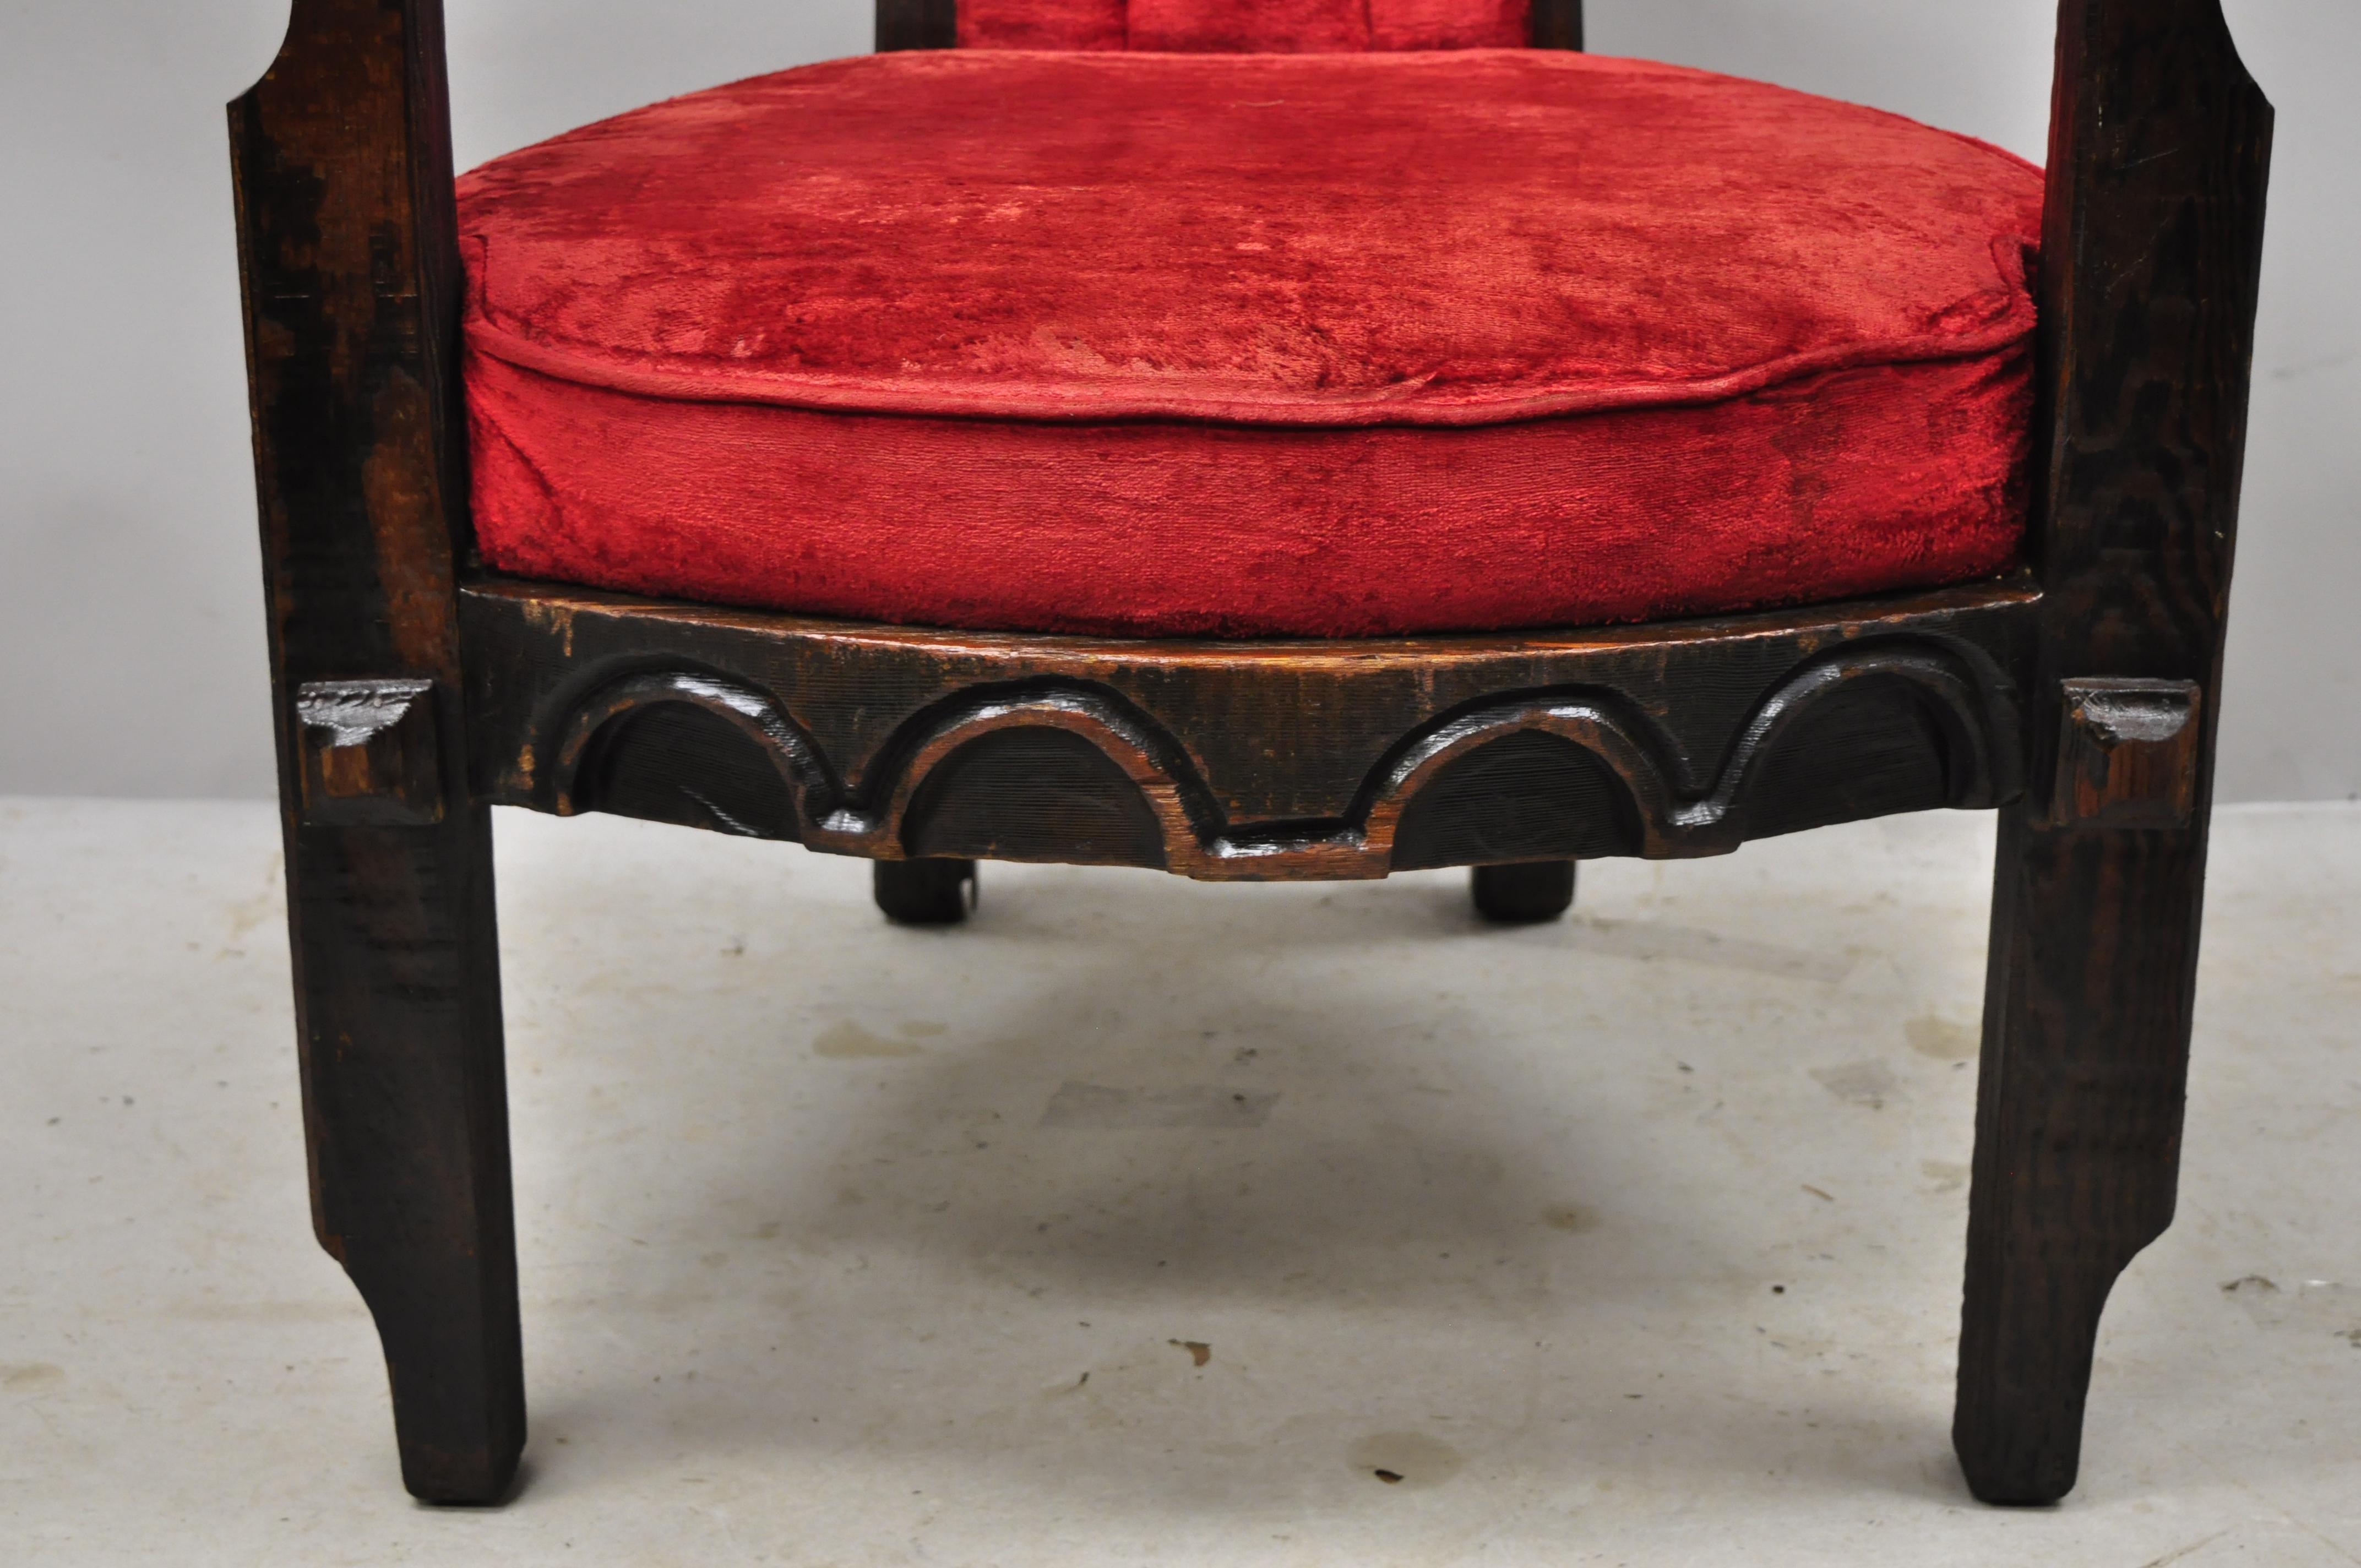 Fabric Maderas De Santa Barbara Gothic Revival Elvis Jungle Room Style Throne Armchair